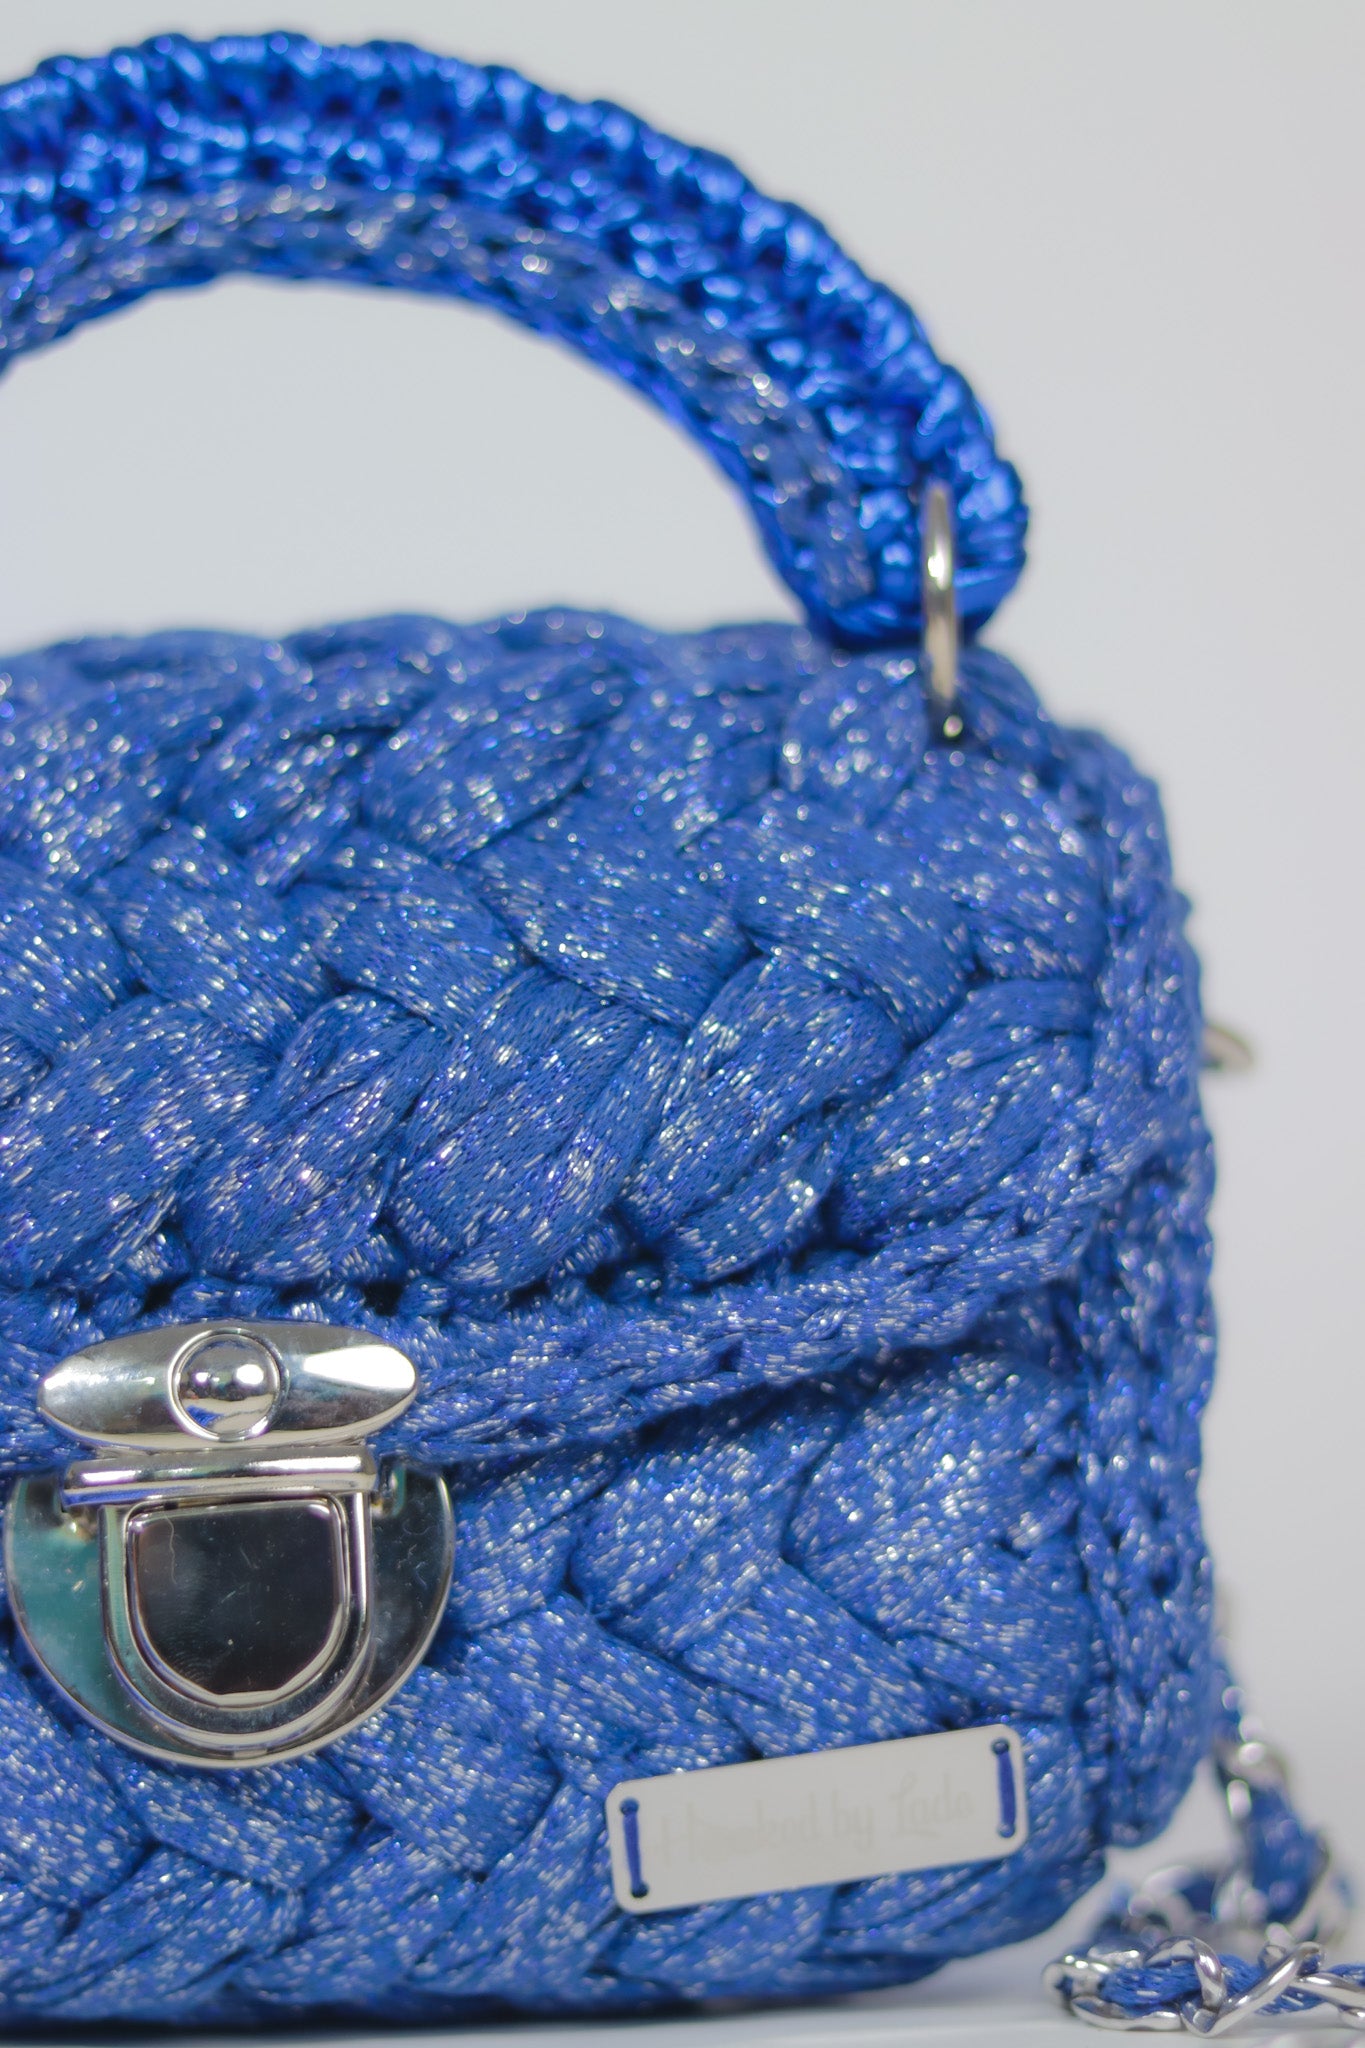 Glittery Royal Blue Crochet Bag - MIDI affair